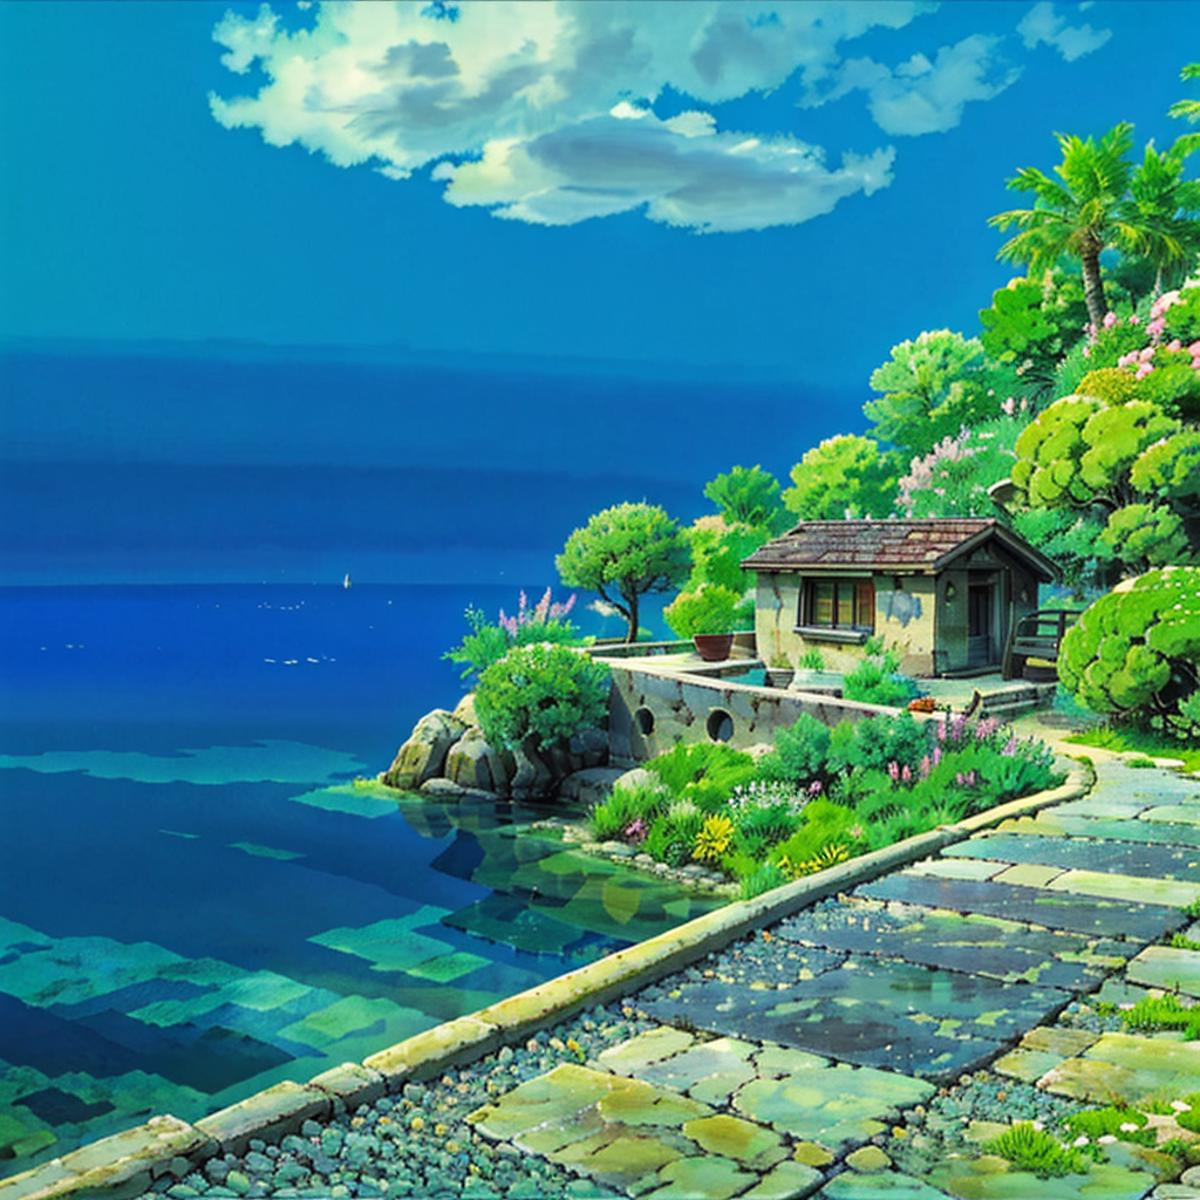 Ghibli anime image by yofaraway